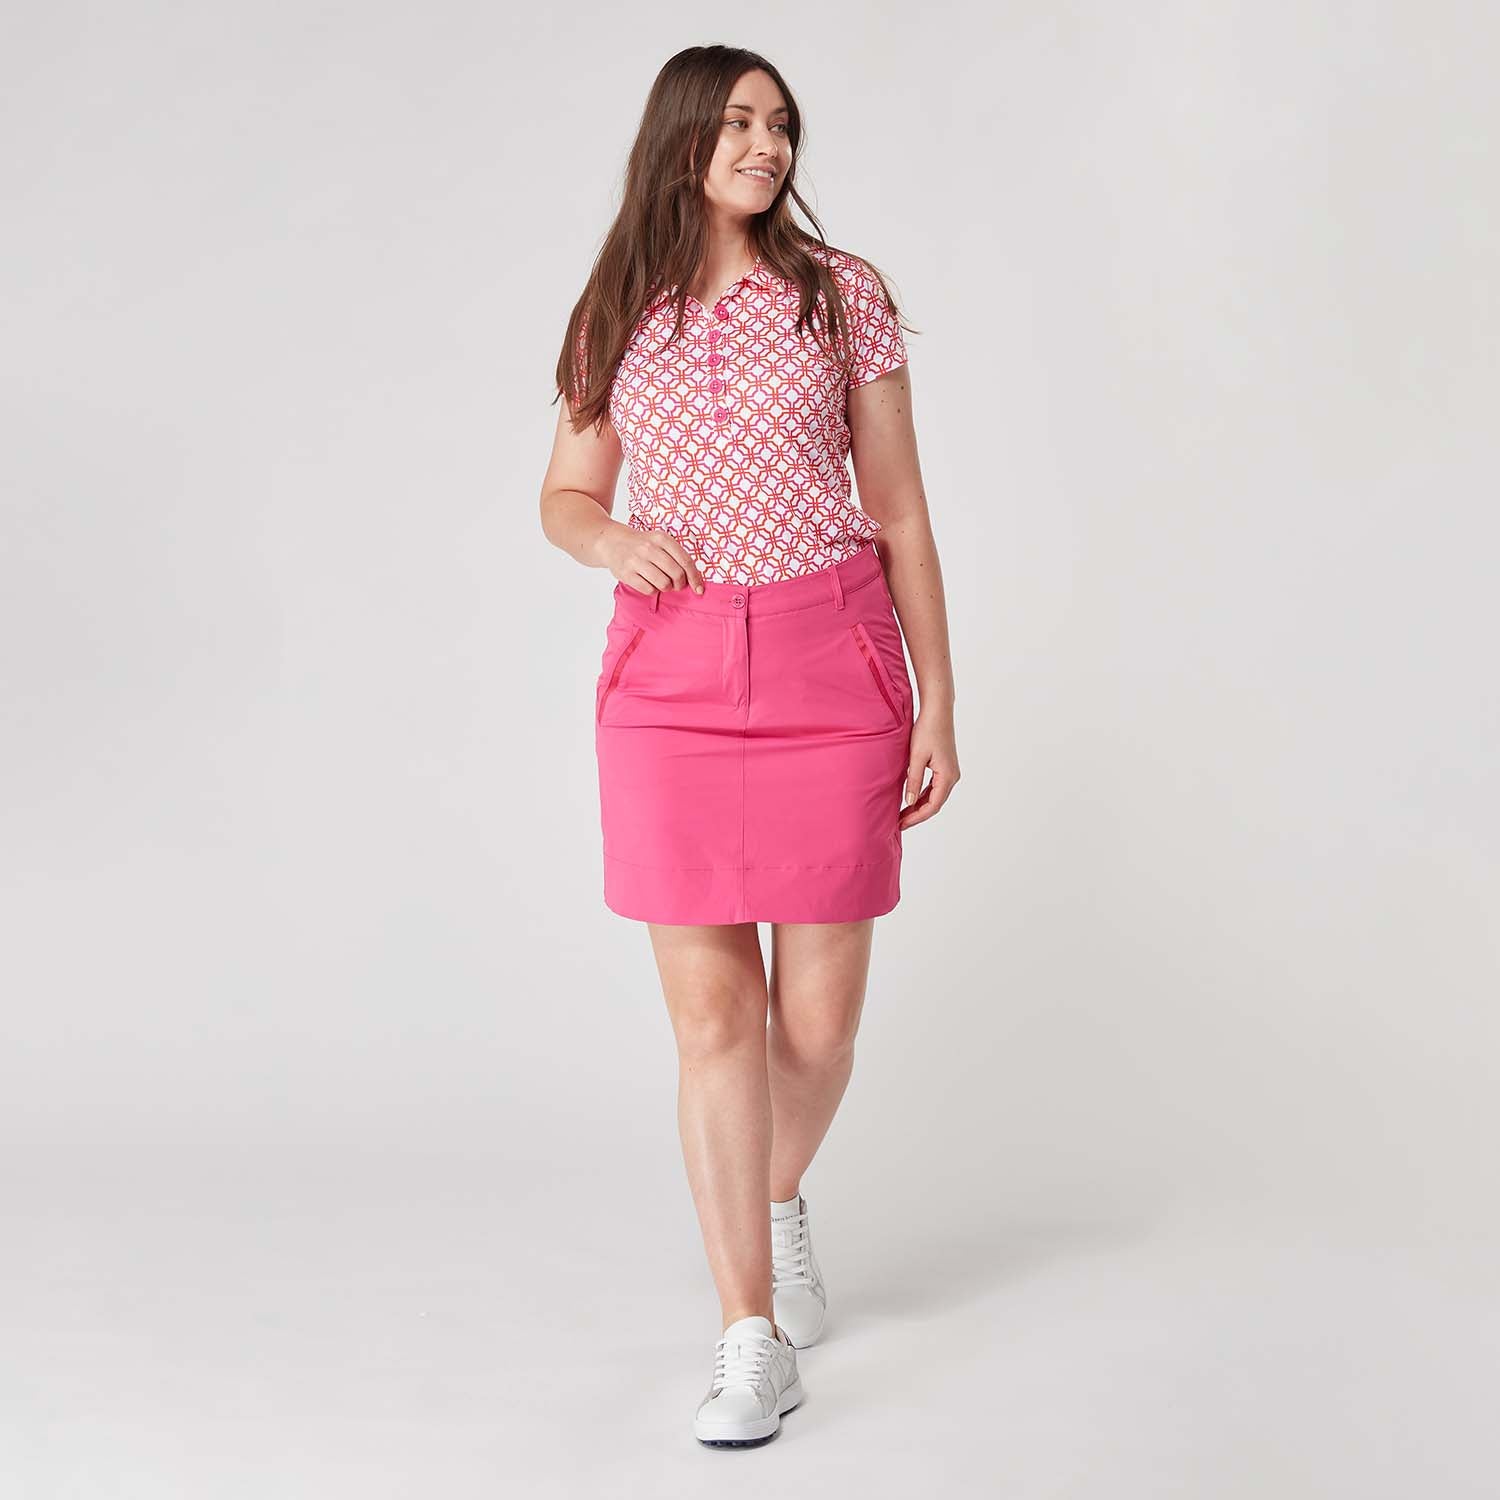 Swing Out Sister Ladies Lush Pink Dri-fit Golf Skort